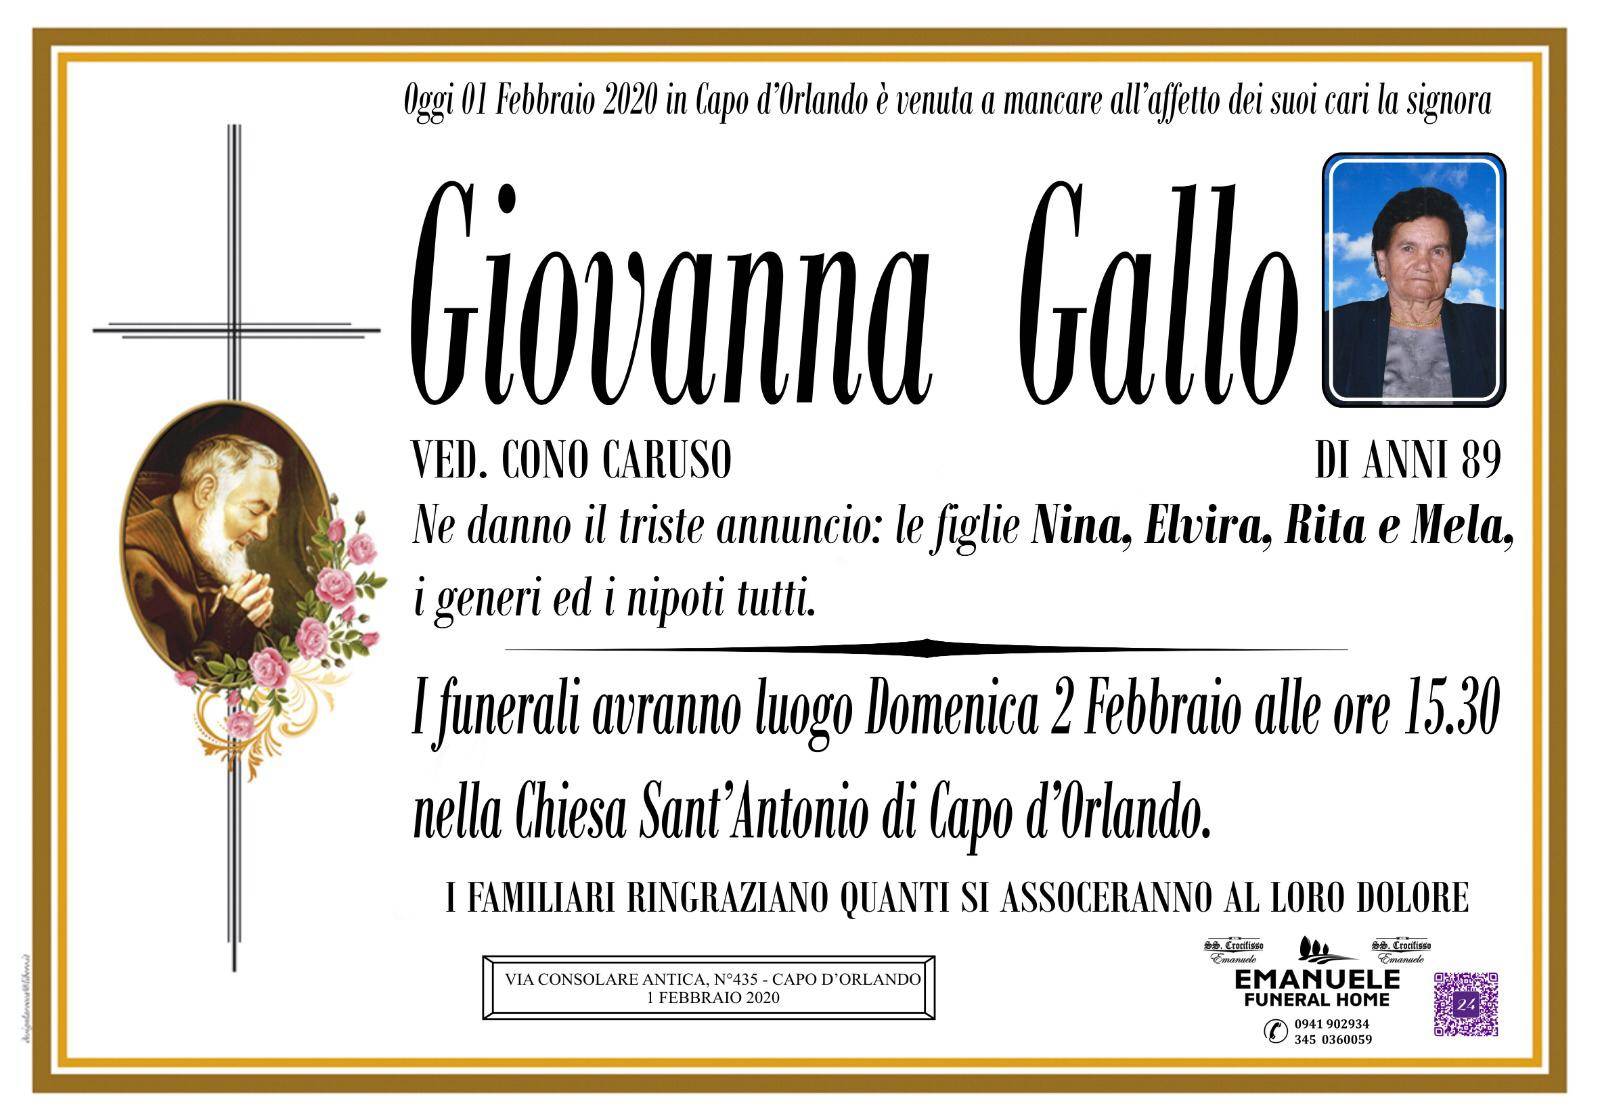 Giovanna Gallo